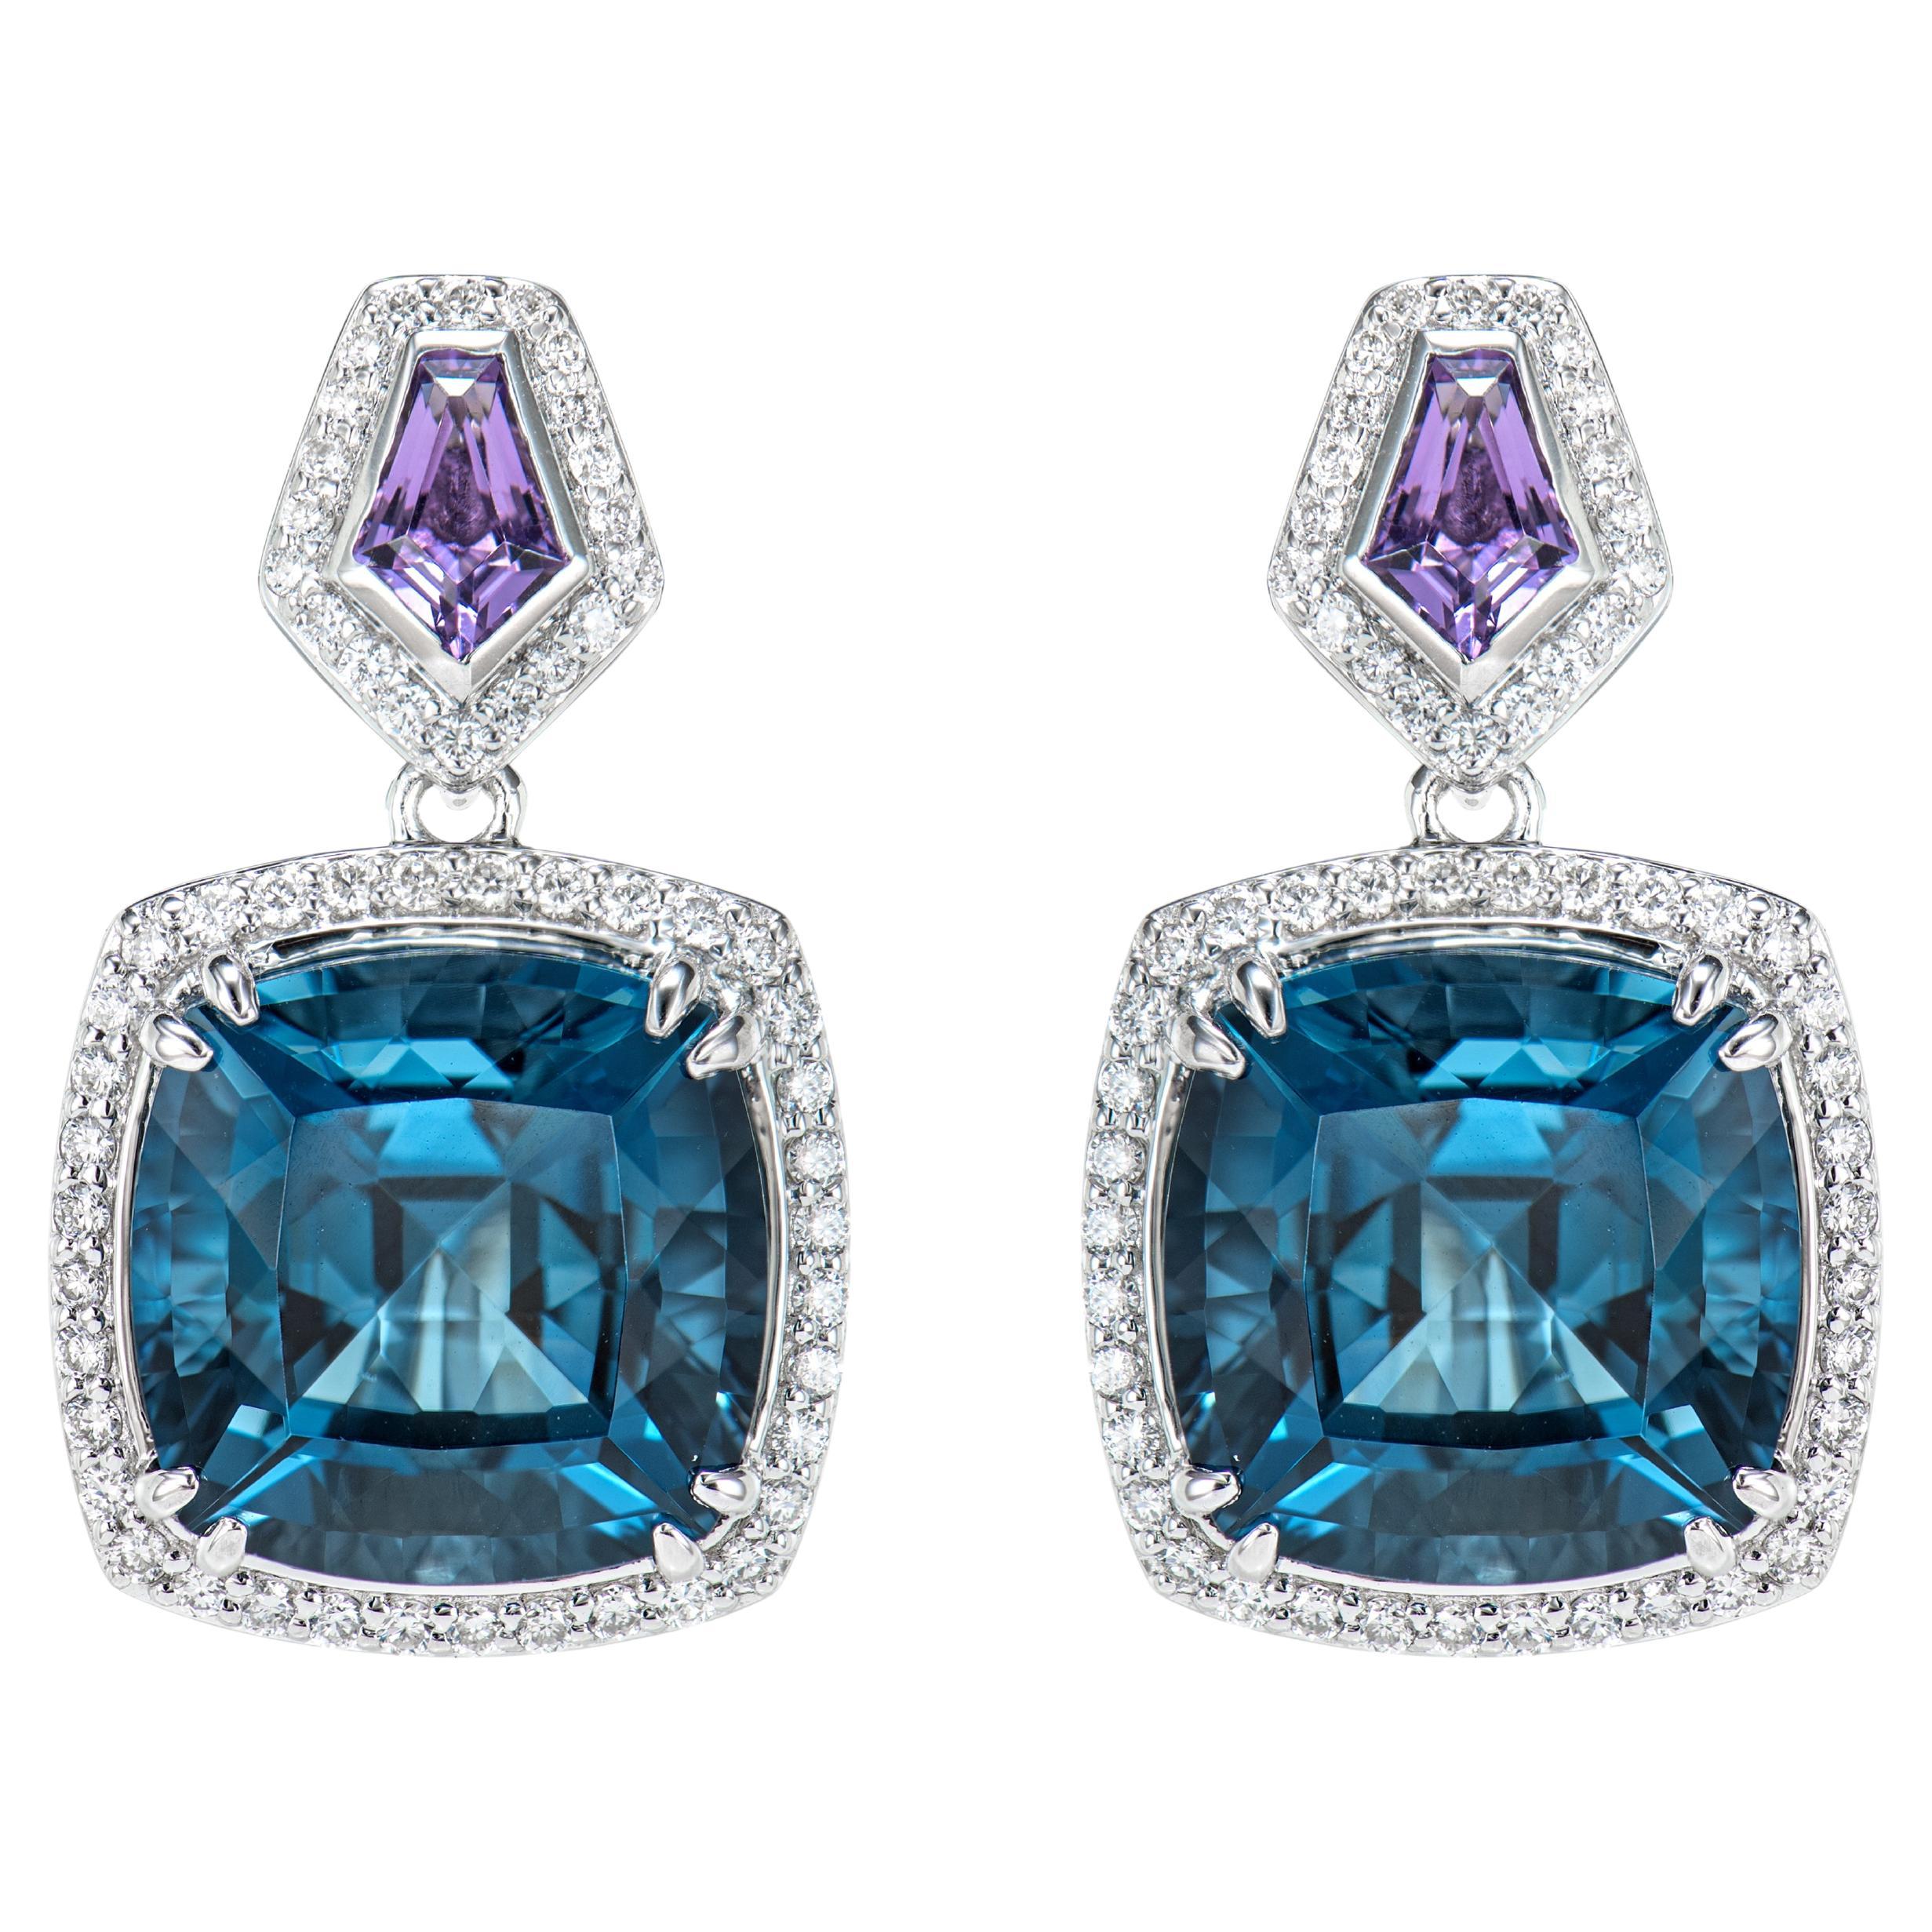 18.43 Carat London Blue Topaz Drop Earrings in 18KWG with Amethyst and Diamond.